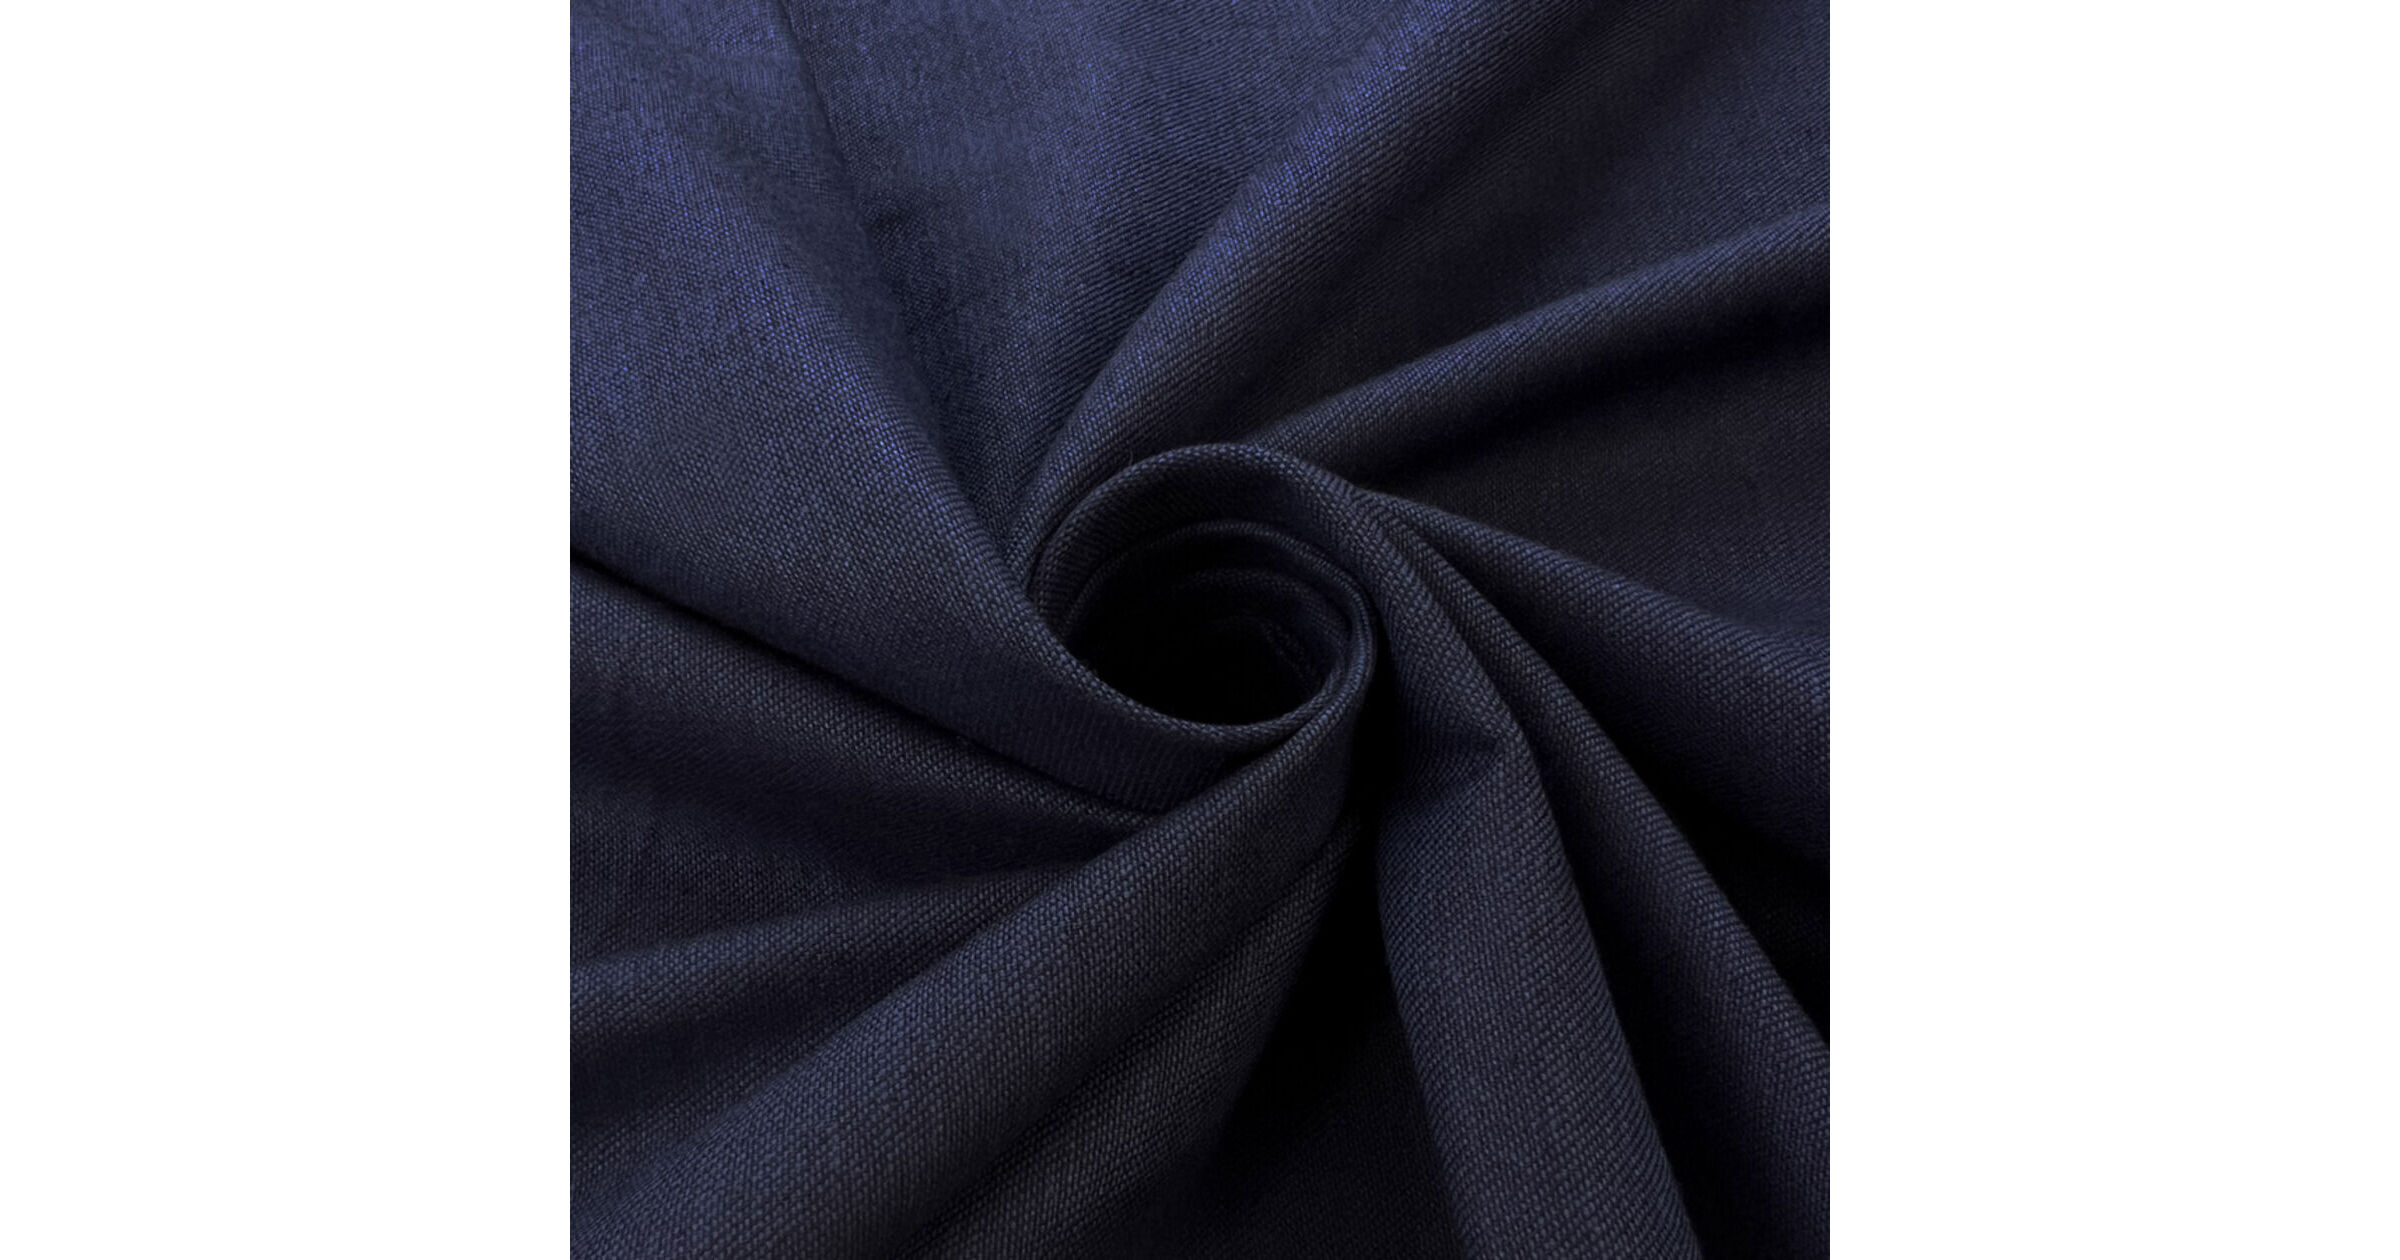 Dark Blue Lightweight Cotton Fabric | 6oz Denim - Indigo Dreams